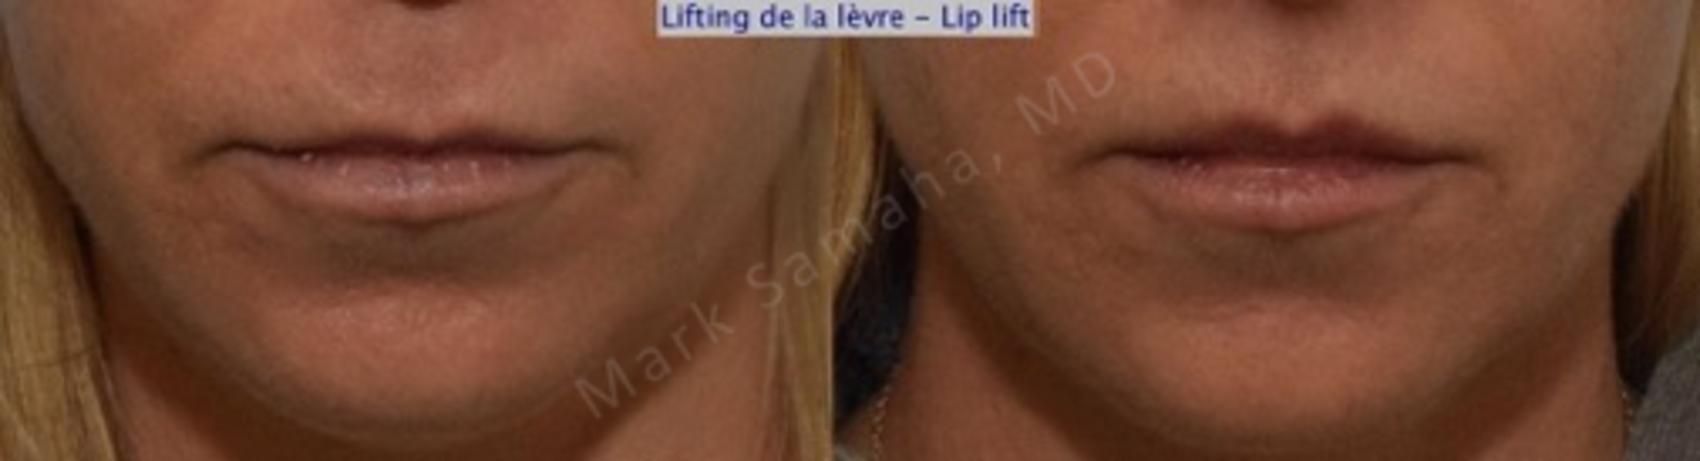 Before & After Lifting de la lèvre supérieure / Lip Lift  Case 115 View #1 View in Montreal, QC